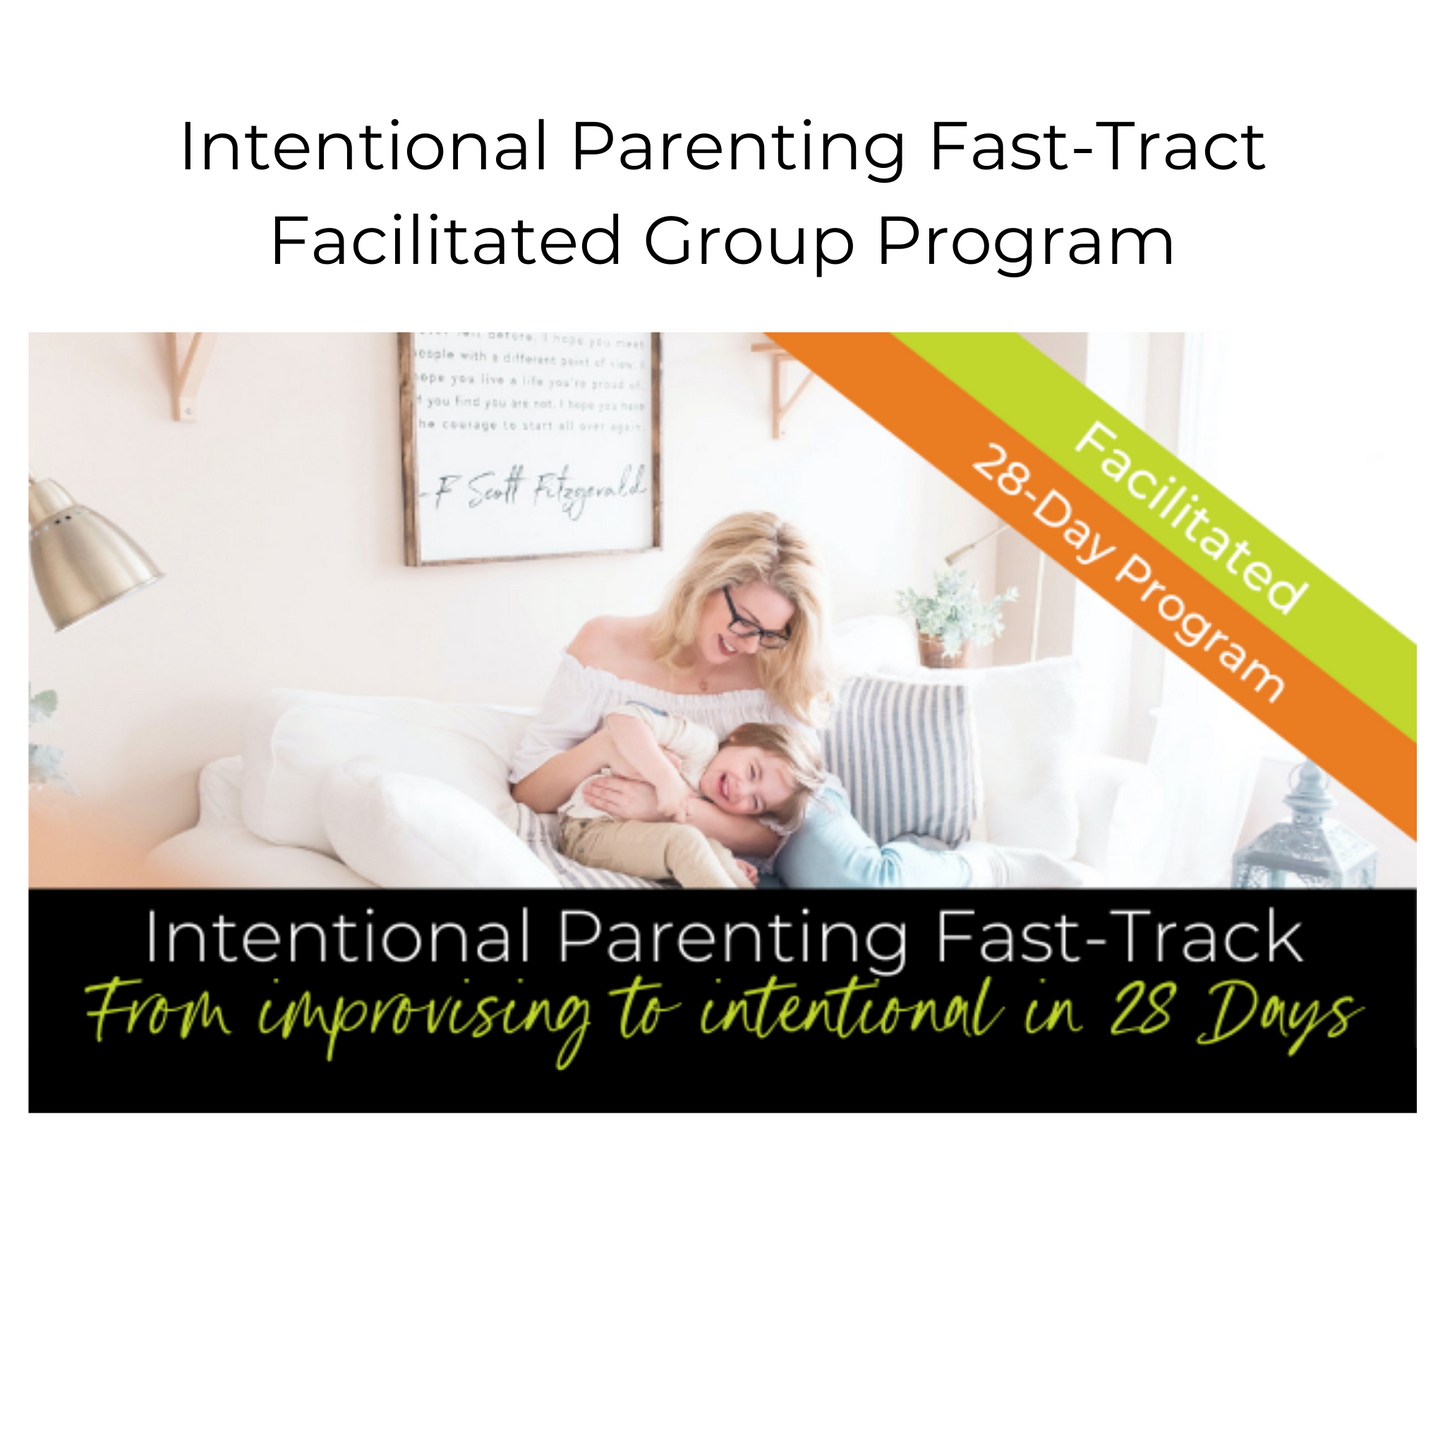 Intentional Parenting Fast-Track Program